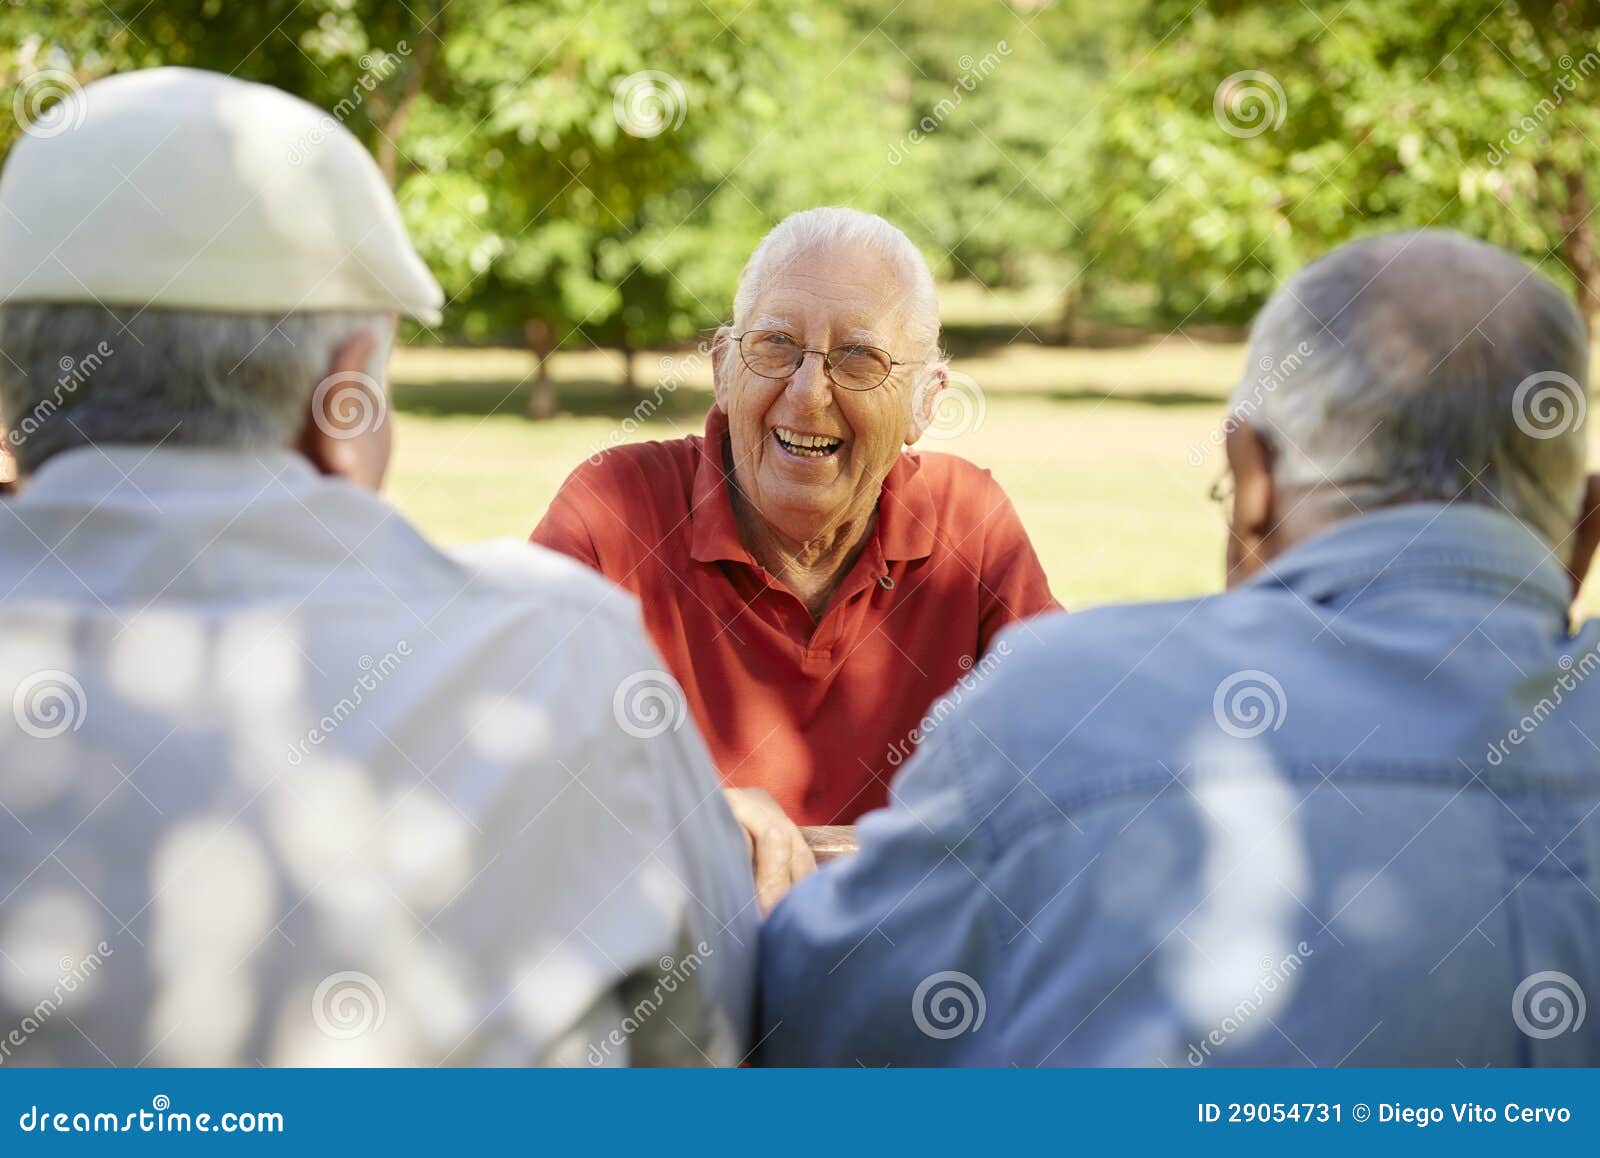 group of senior men having fun and laughing in park